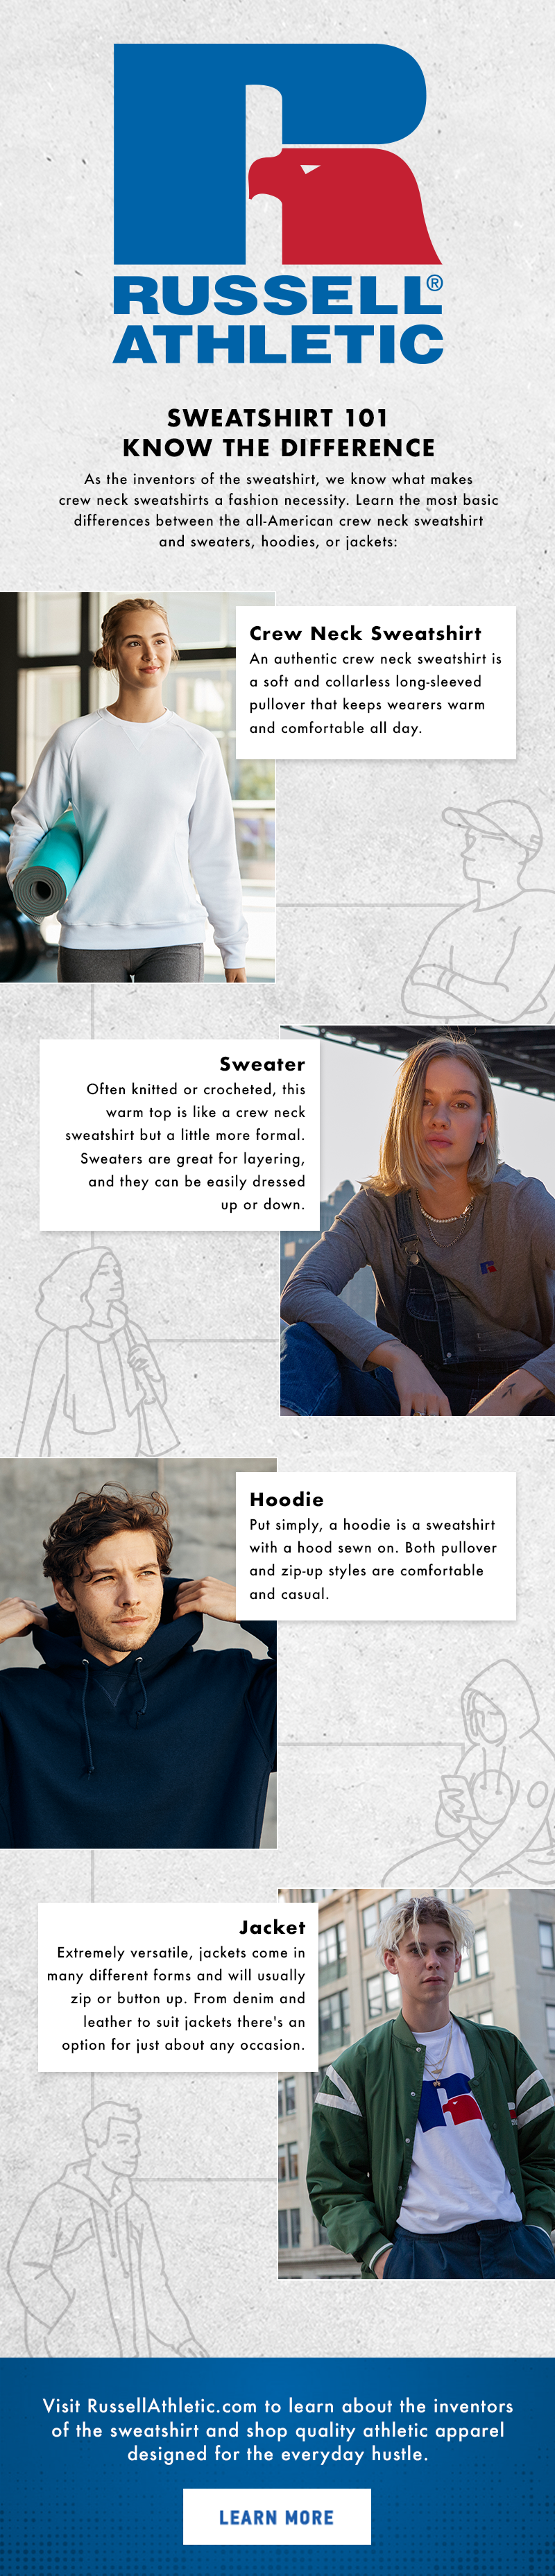 Sweatshirt types infographic.